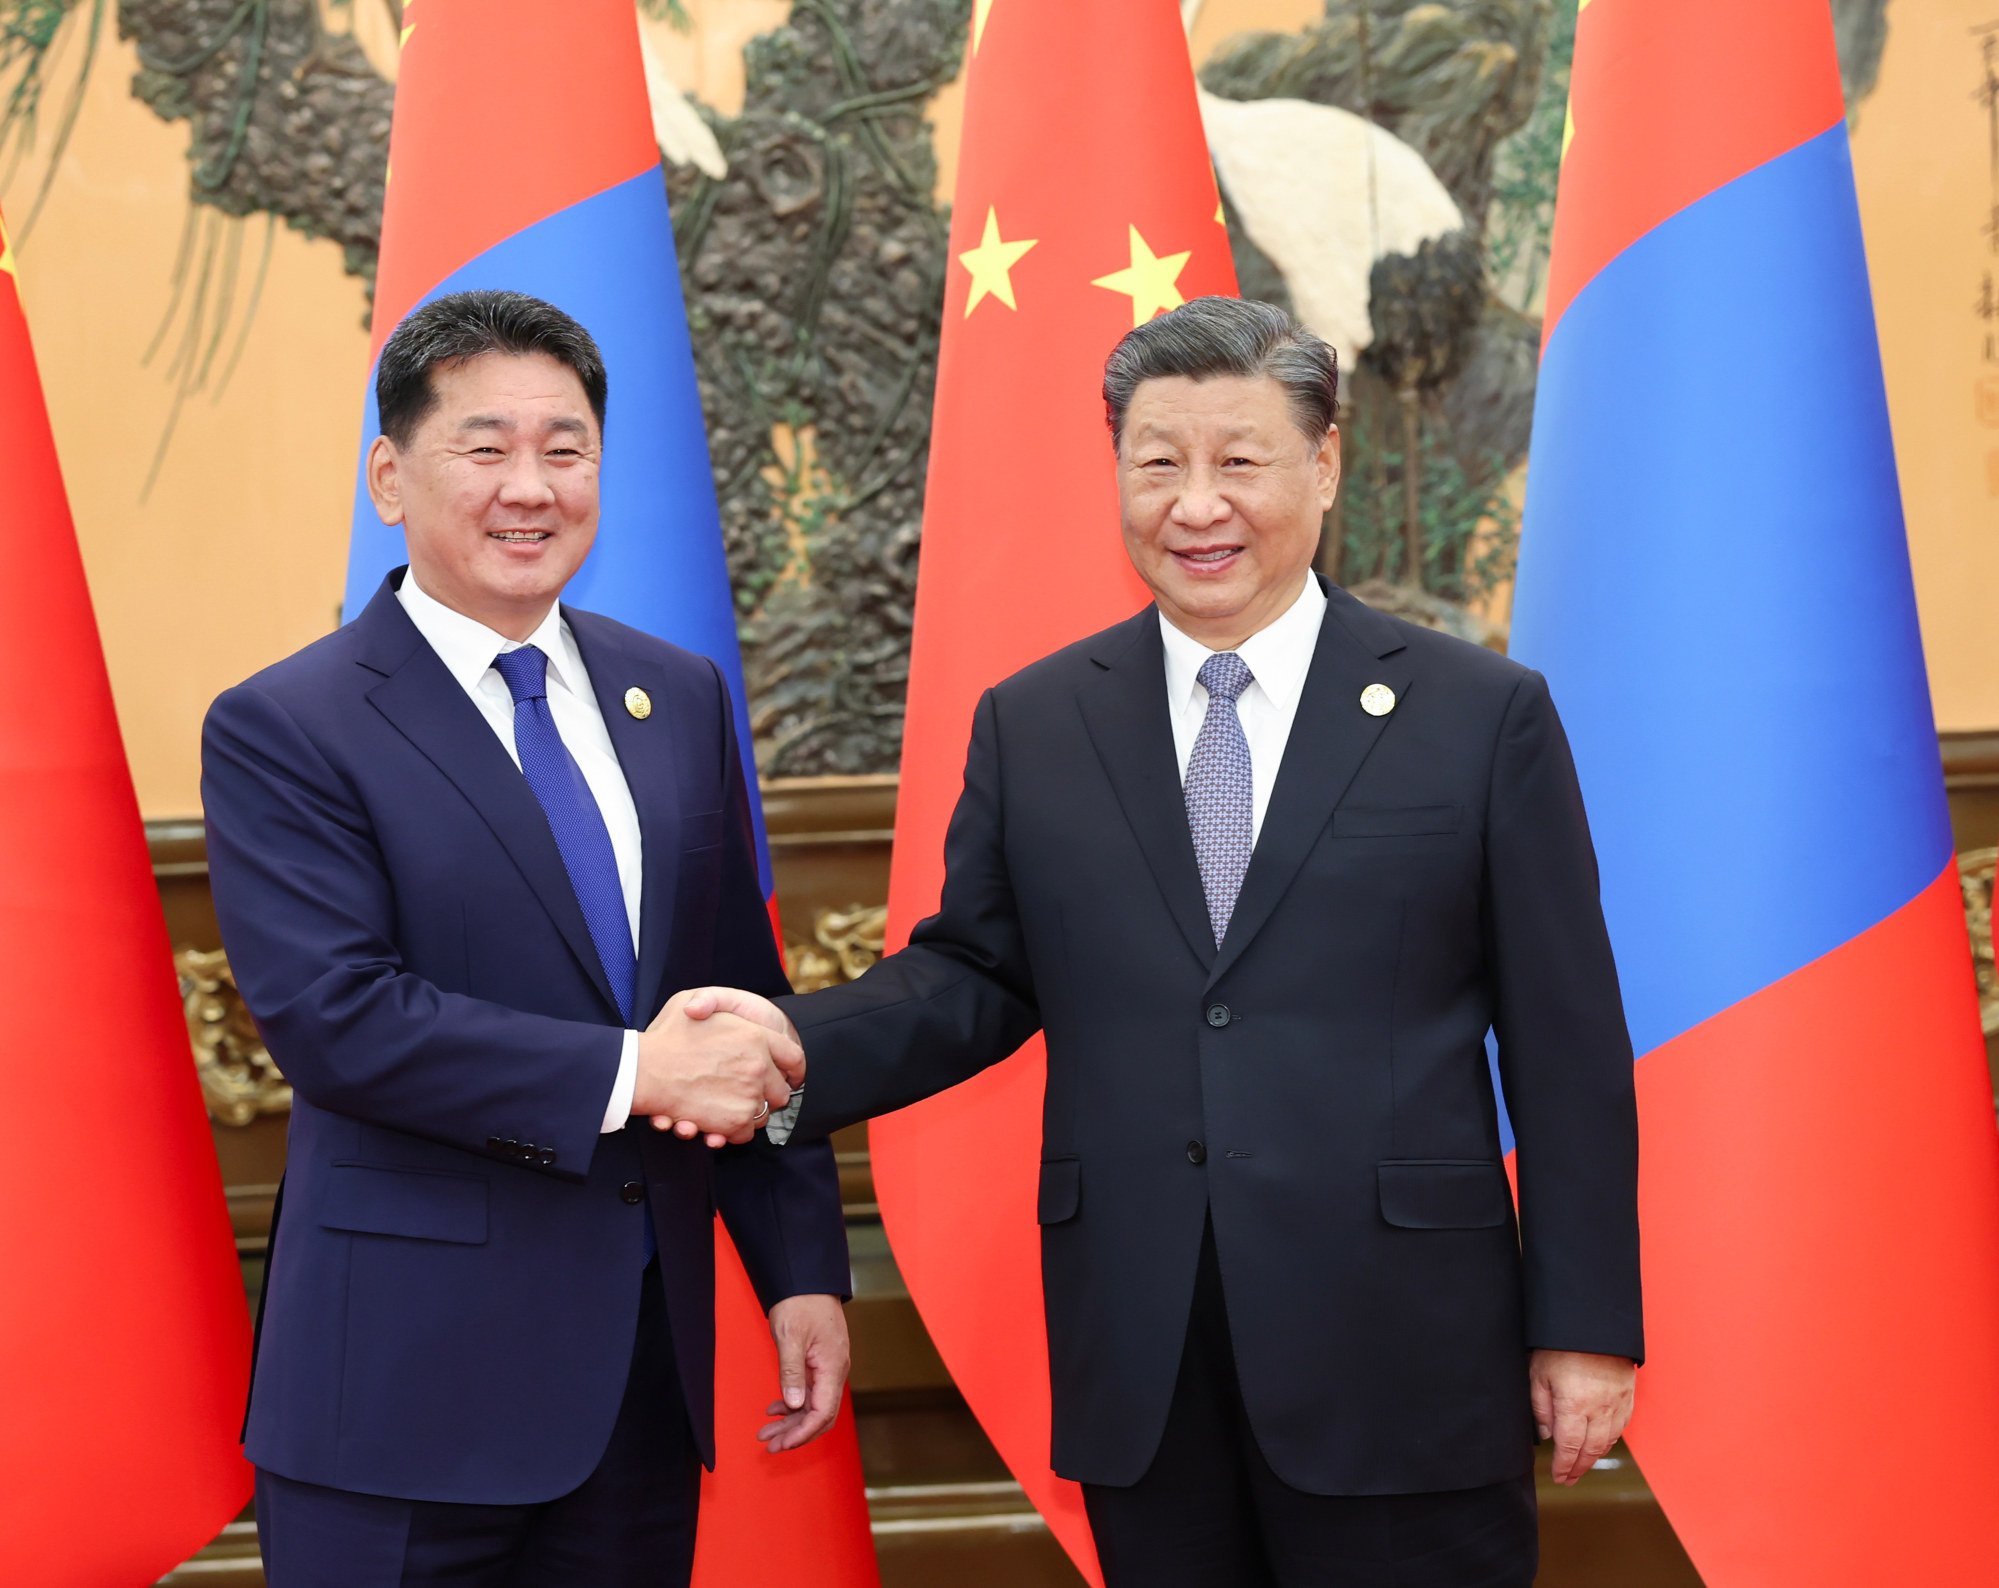 Xi Jinping with Mongolian President Ukhnaa Khurelsukh. Photo: SCMPOST